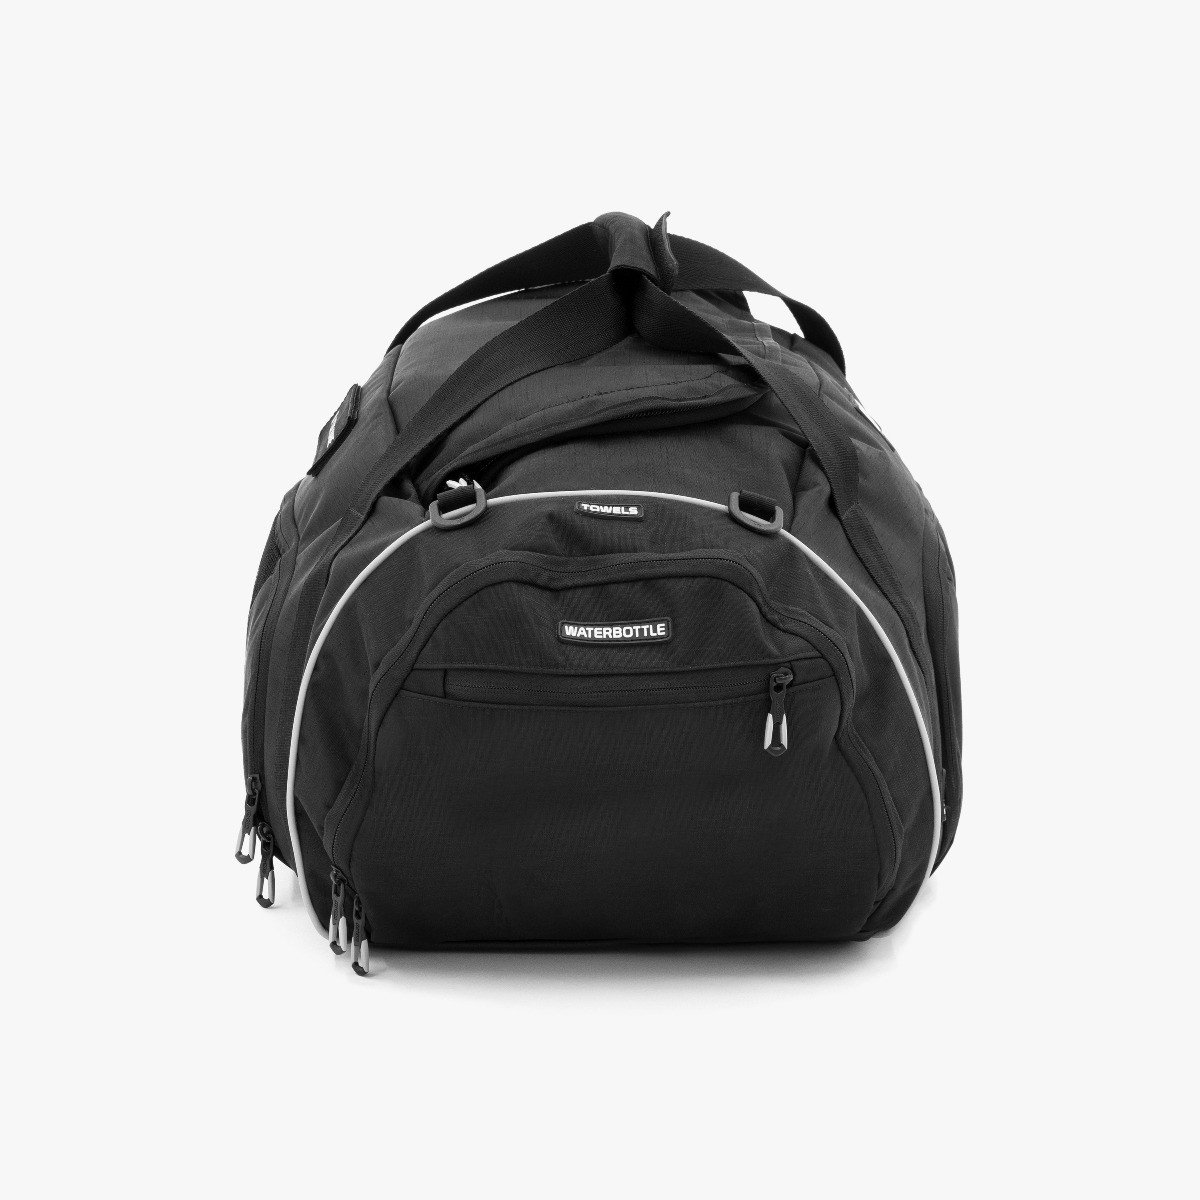 duffel bag 50 liters black scicon sports pr056200543